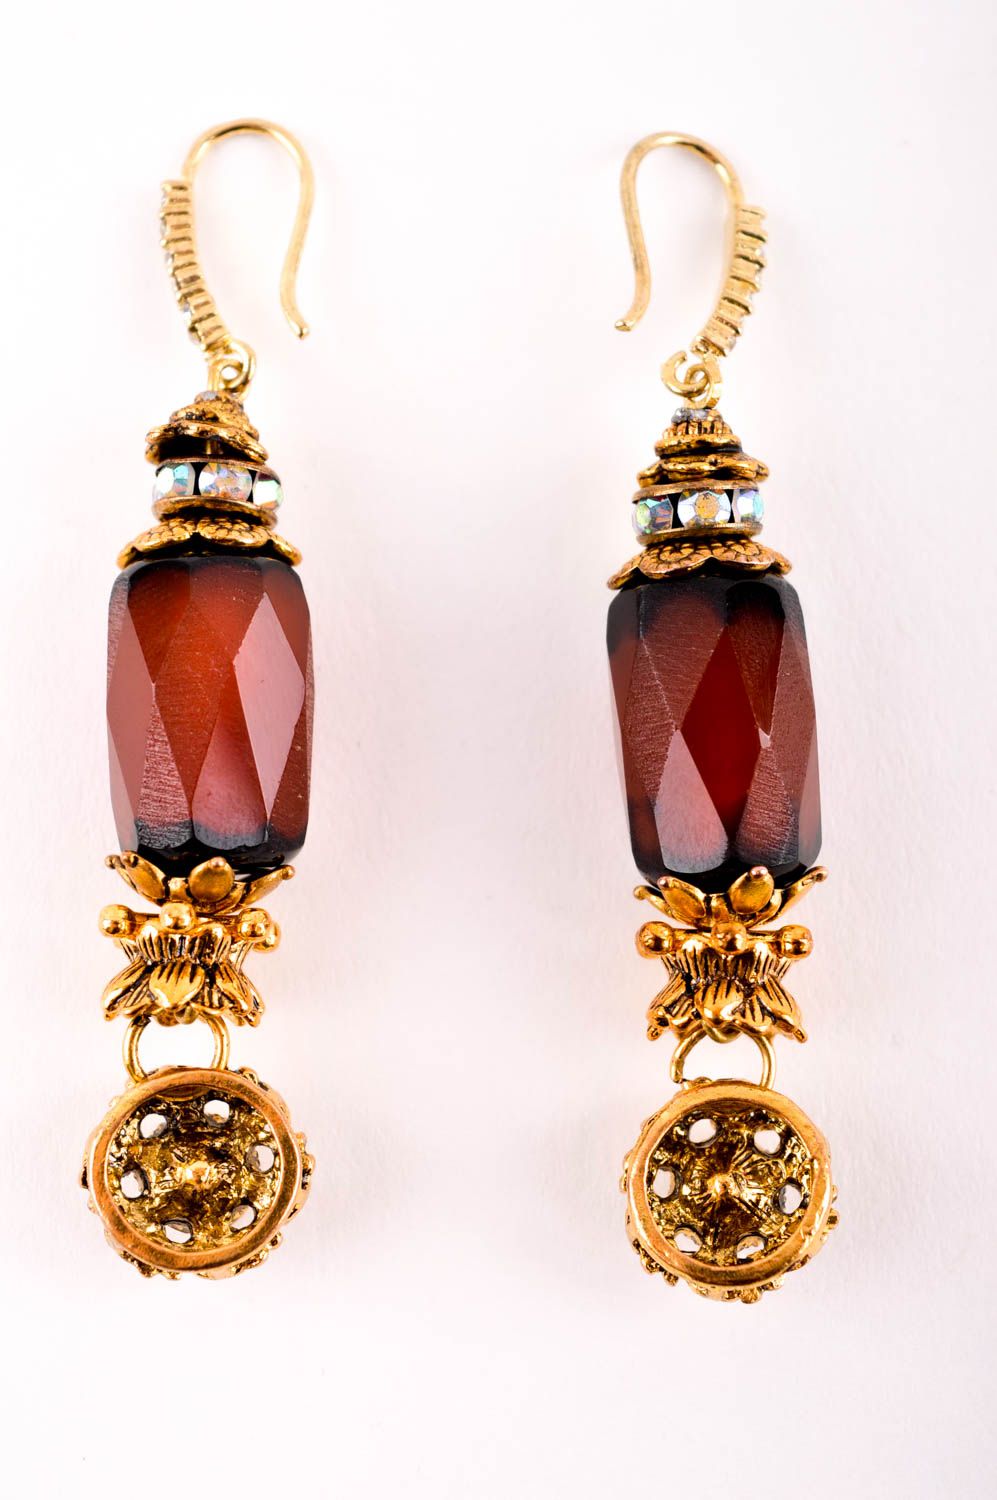 Handmade earrings designer earrings with stones unusual jewelry gift for her photo 4